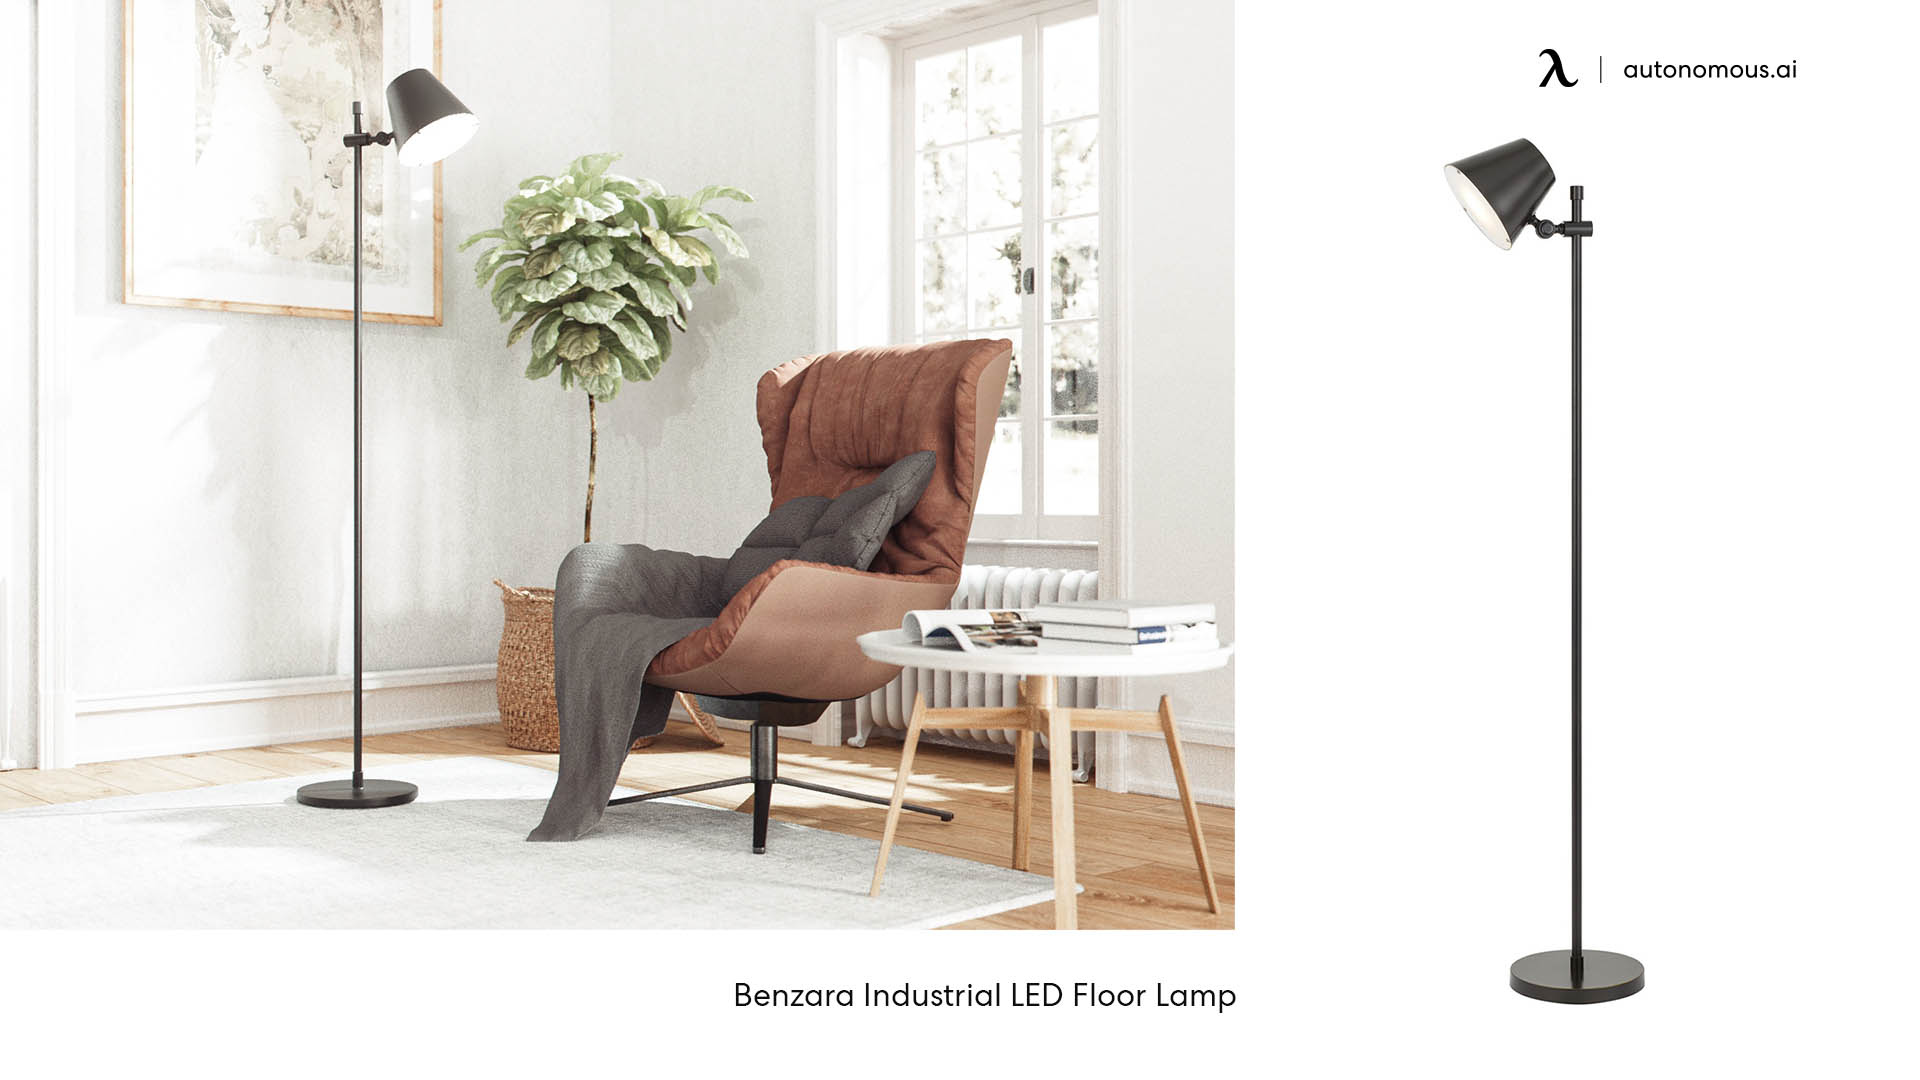 Benzara Industrial LED Floor Lamp